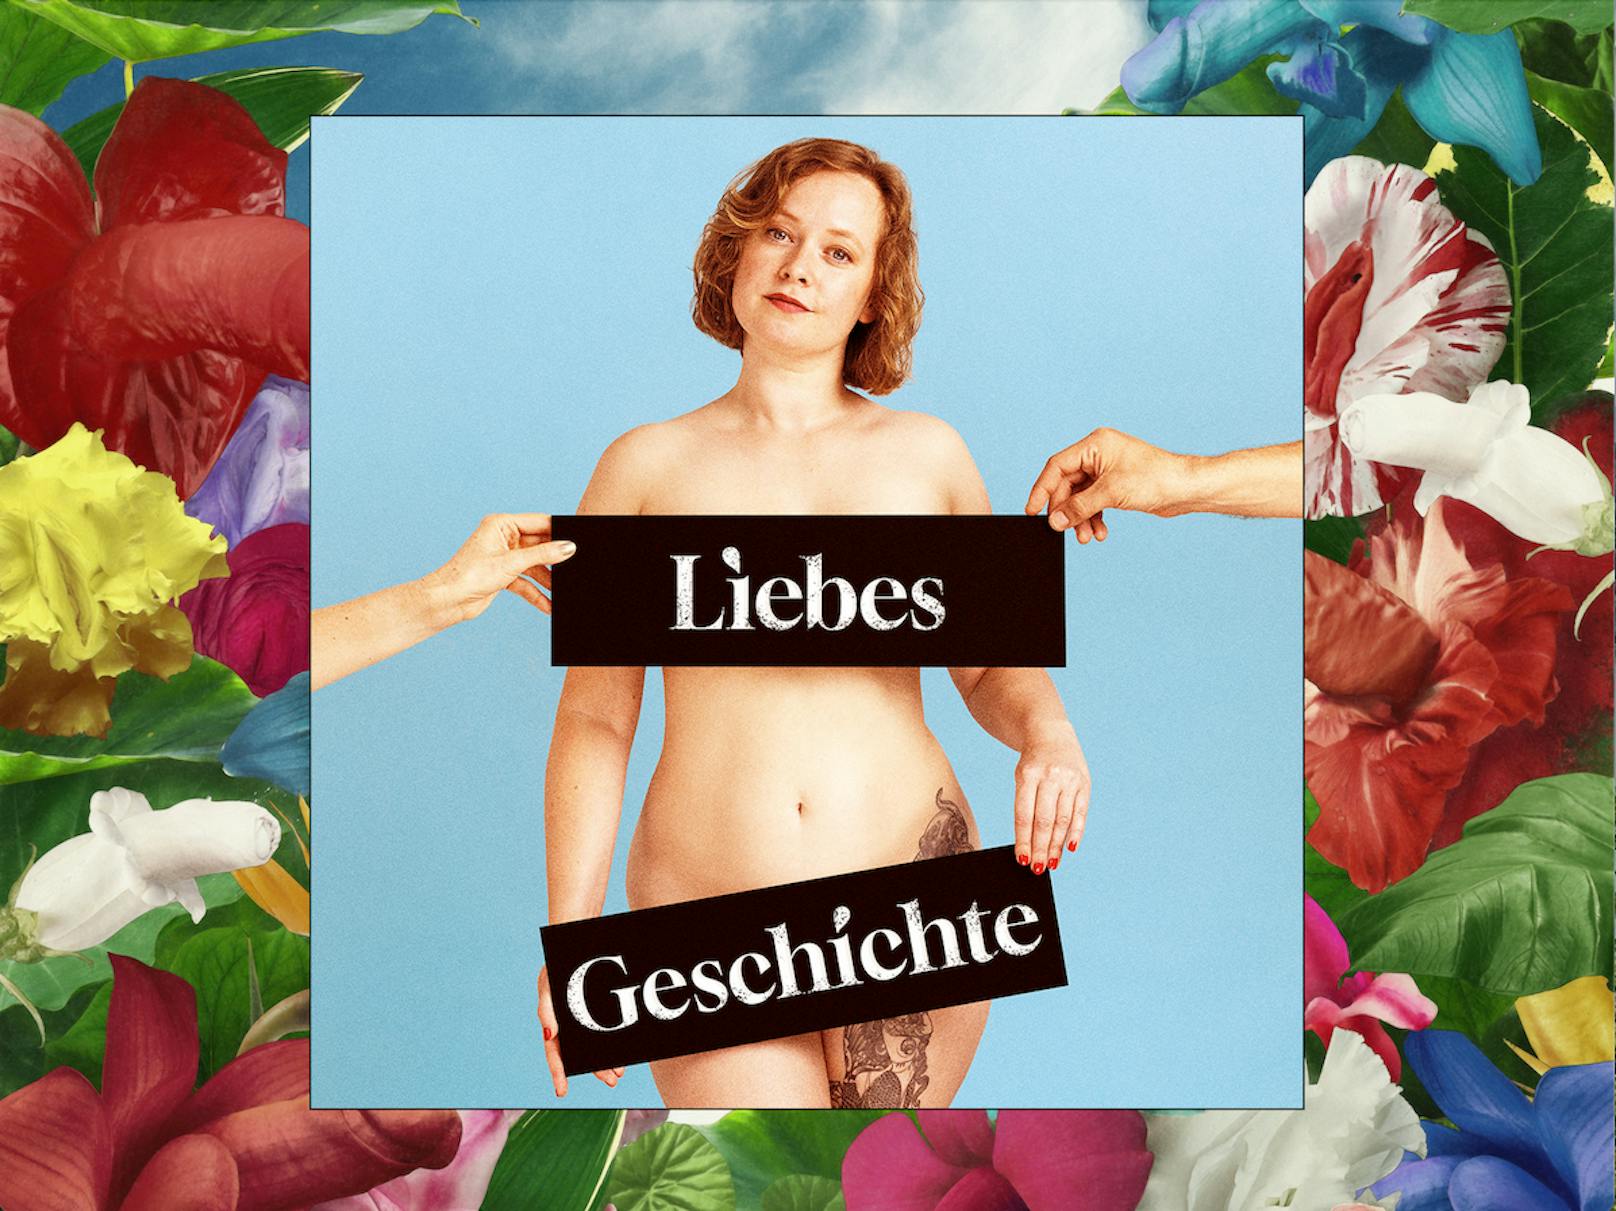 Franziska Singer ist mordsmäßig erfolgreich, hat nun den Podcast "LiebesGeschichte" gestartet.